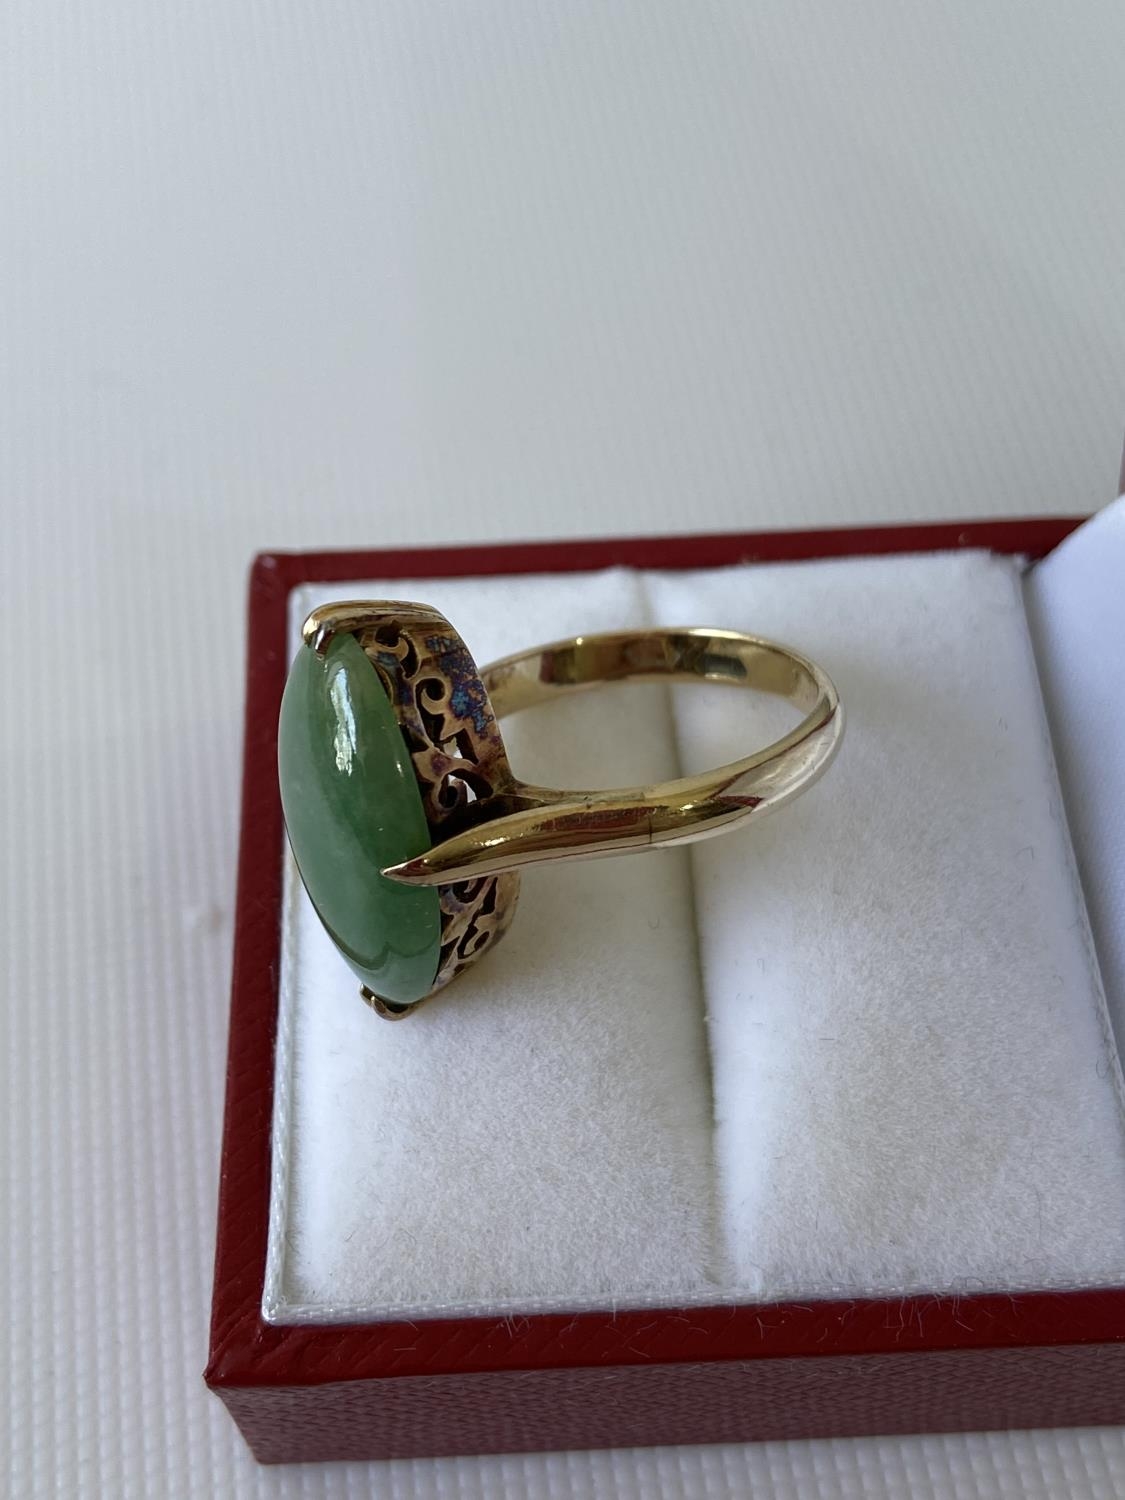 An 18ct gold & jade ring [5.44g] [M 1/2] stamped [18k] - Image 7 of 10